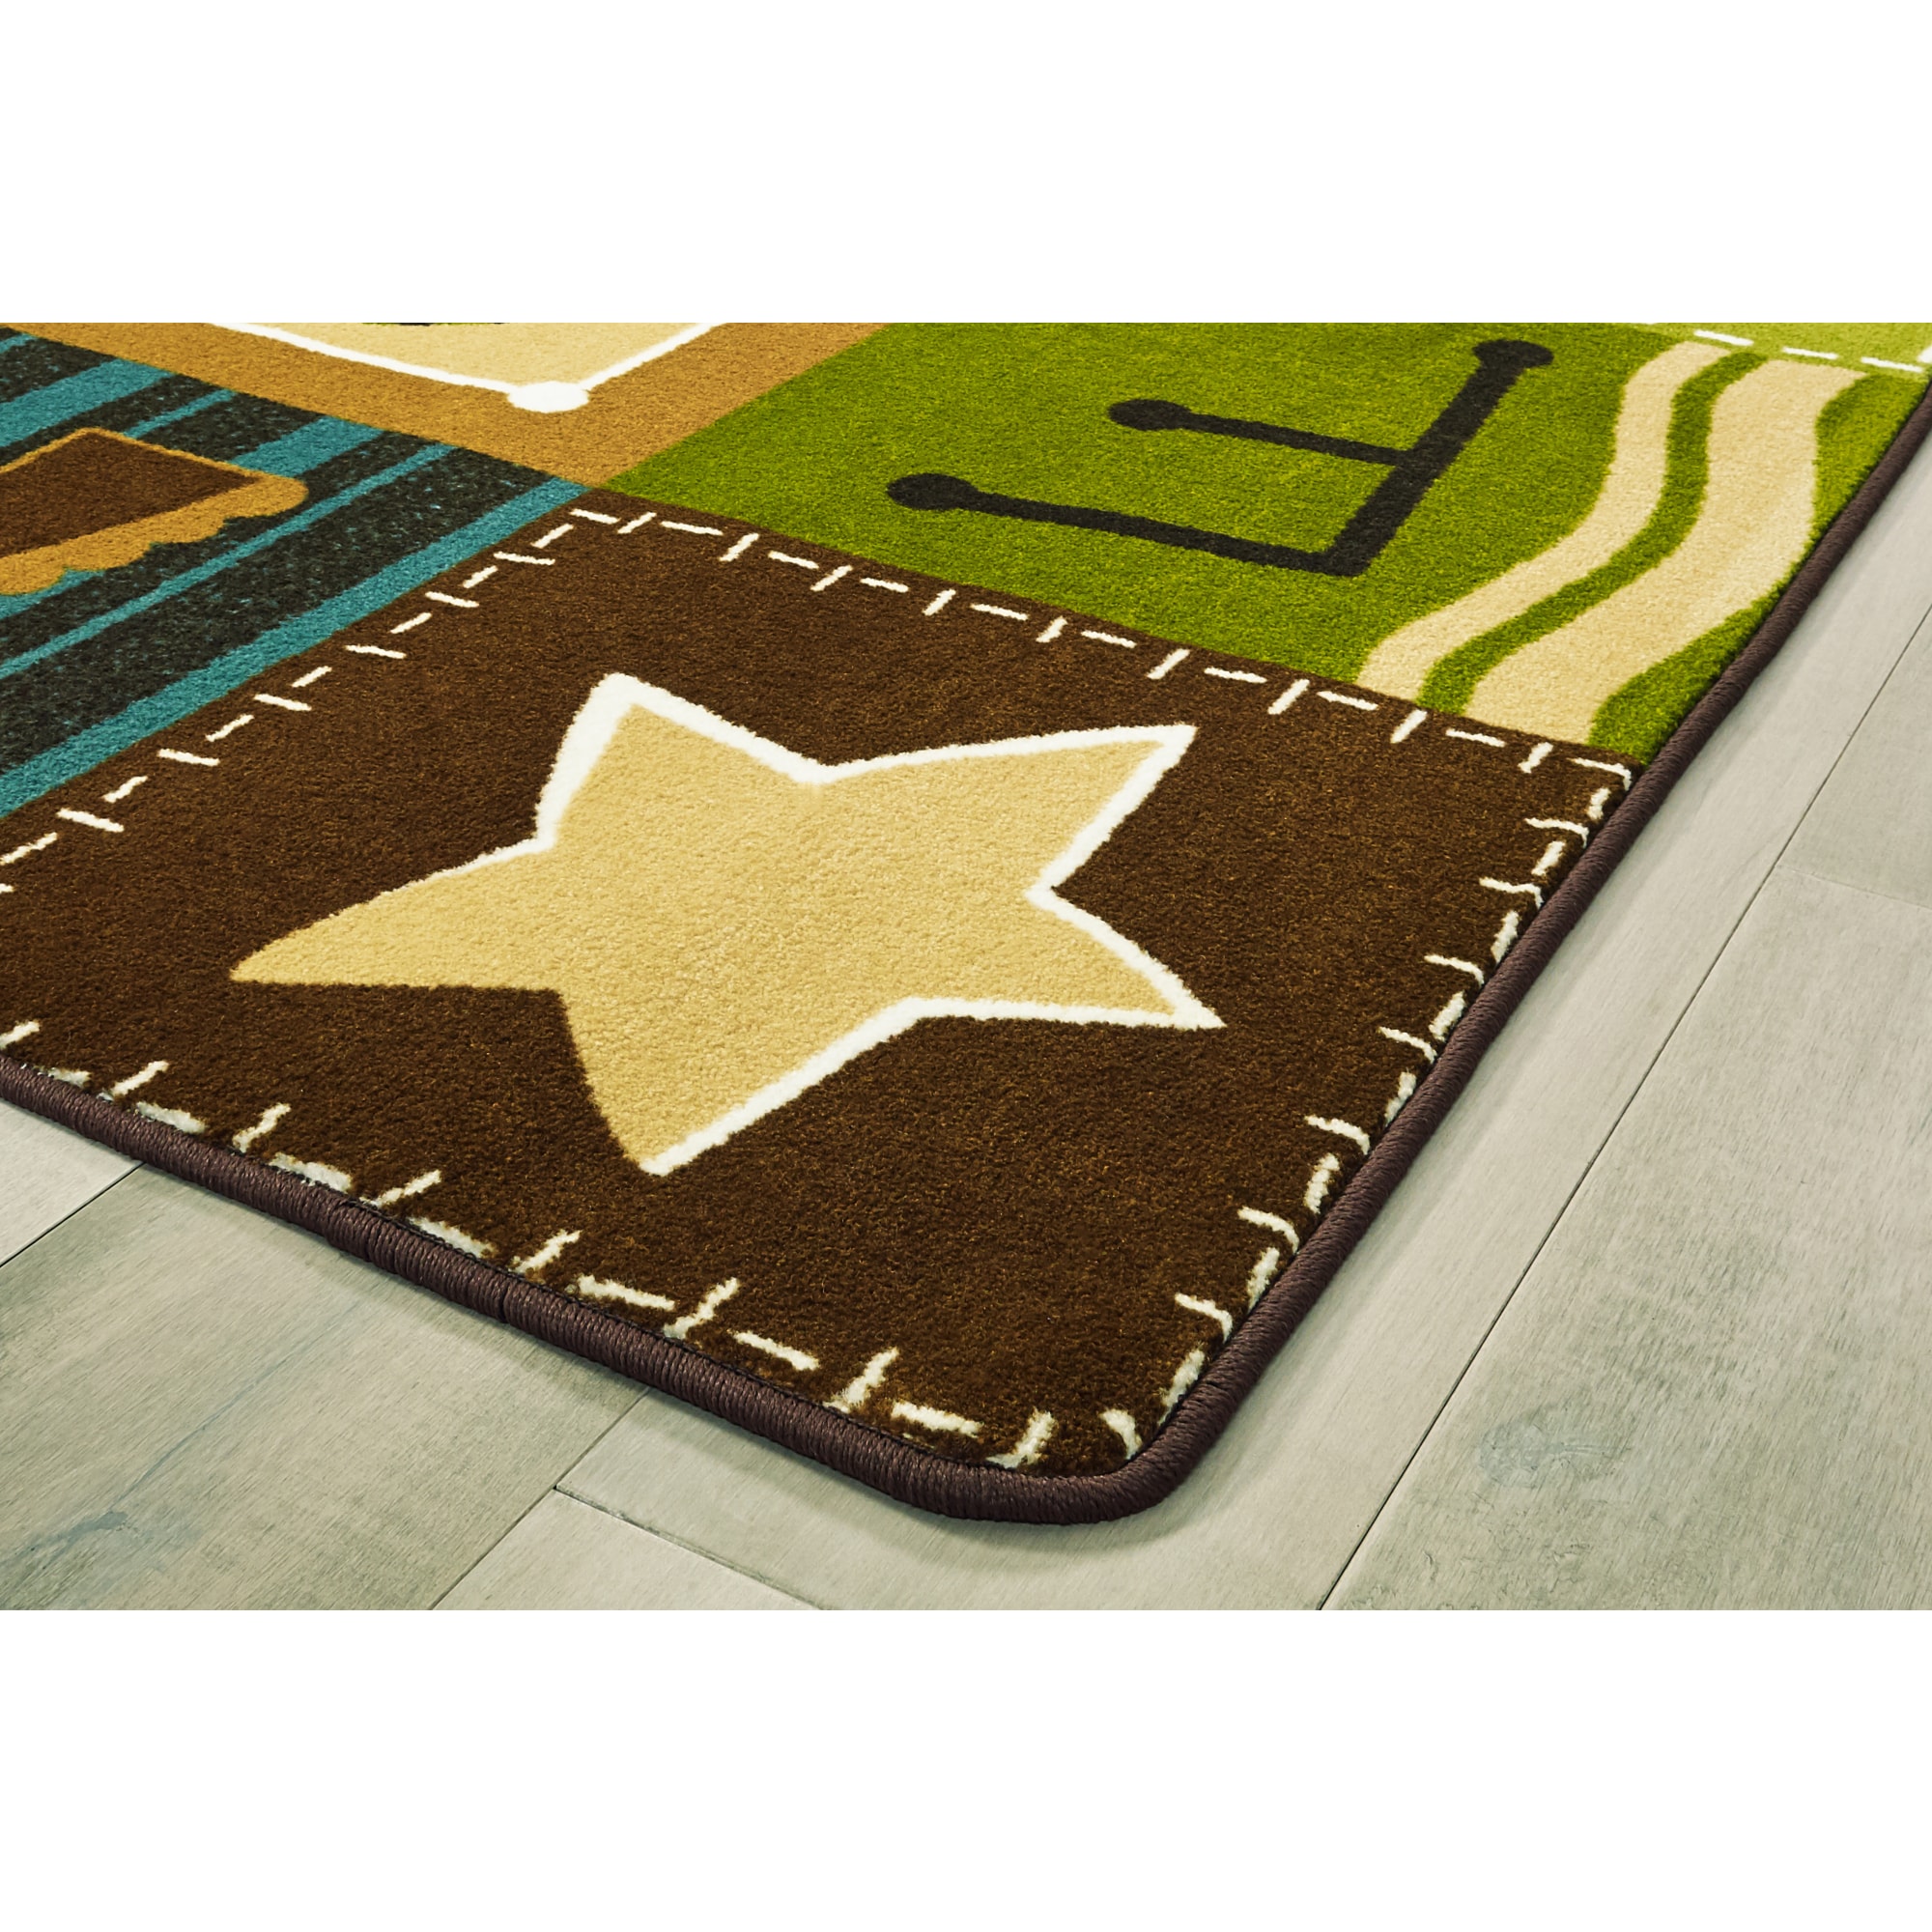 Carpets for Kids® KIDSoft™ Alphabet Blocks Seating Rug, 4’ x 6', Brown - image 2 of 4